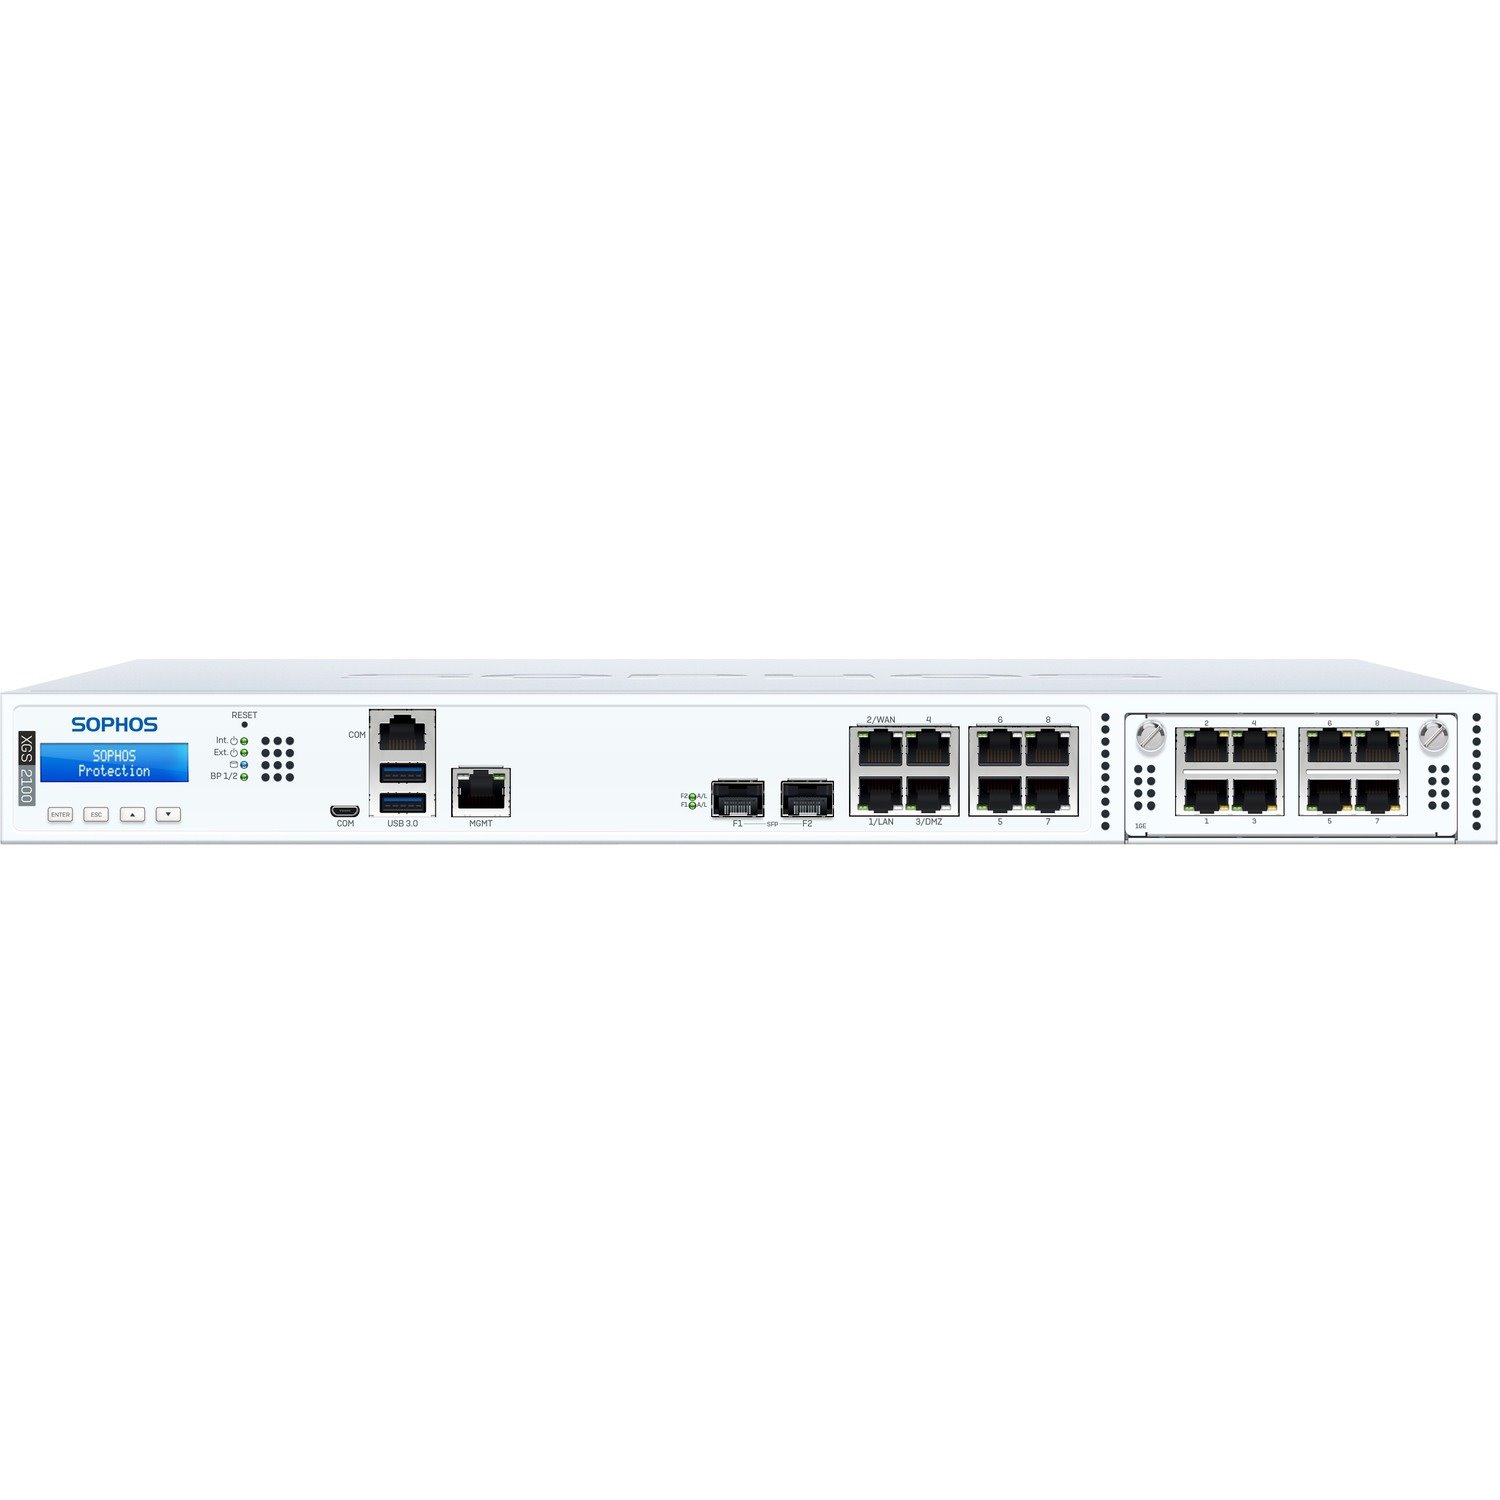 Sophos XGS 2100 Security Appliance - AU power cord